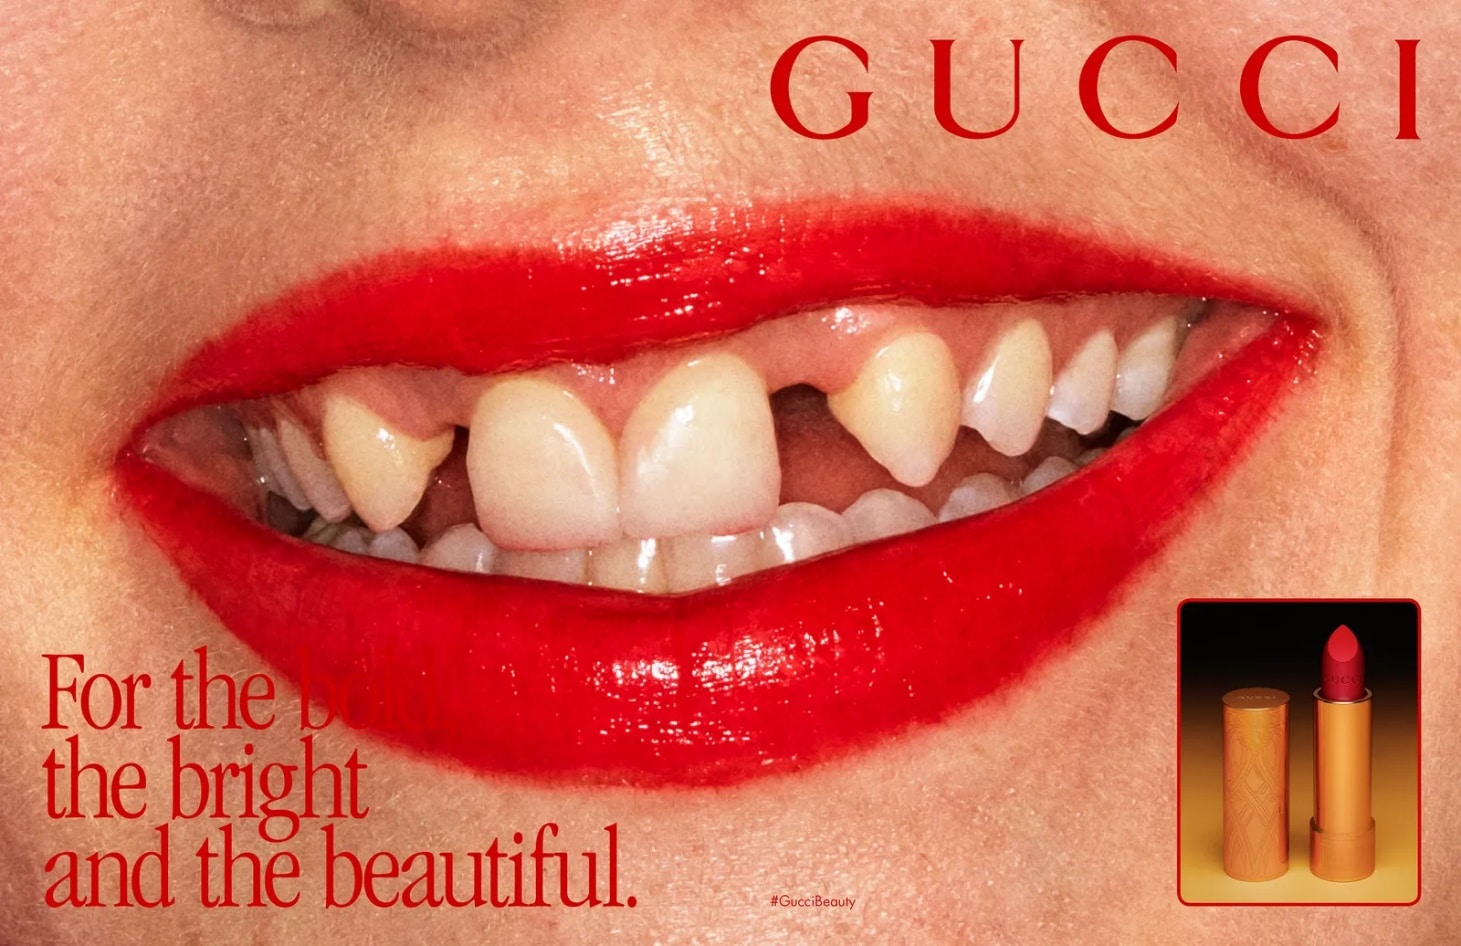 kampania Gucci body positive